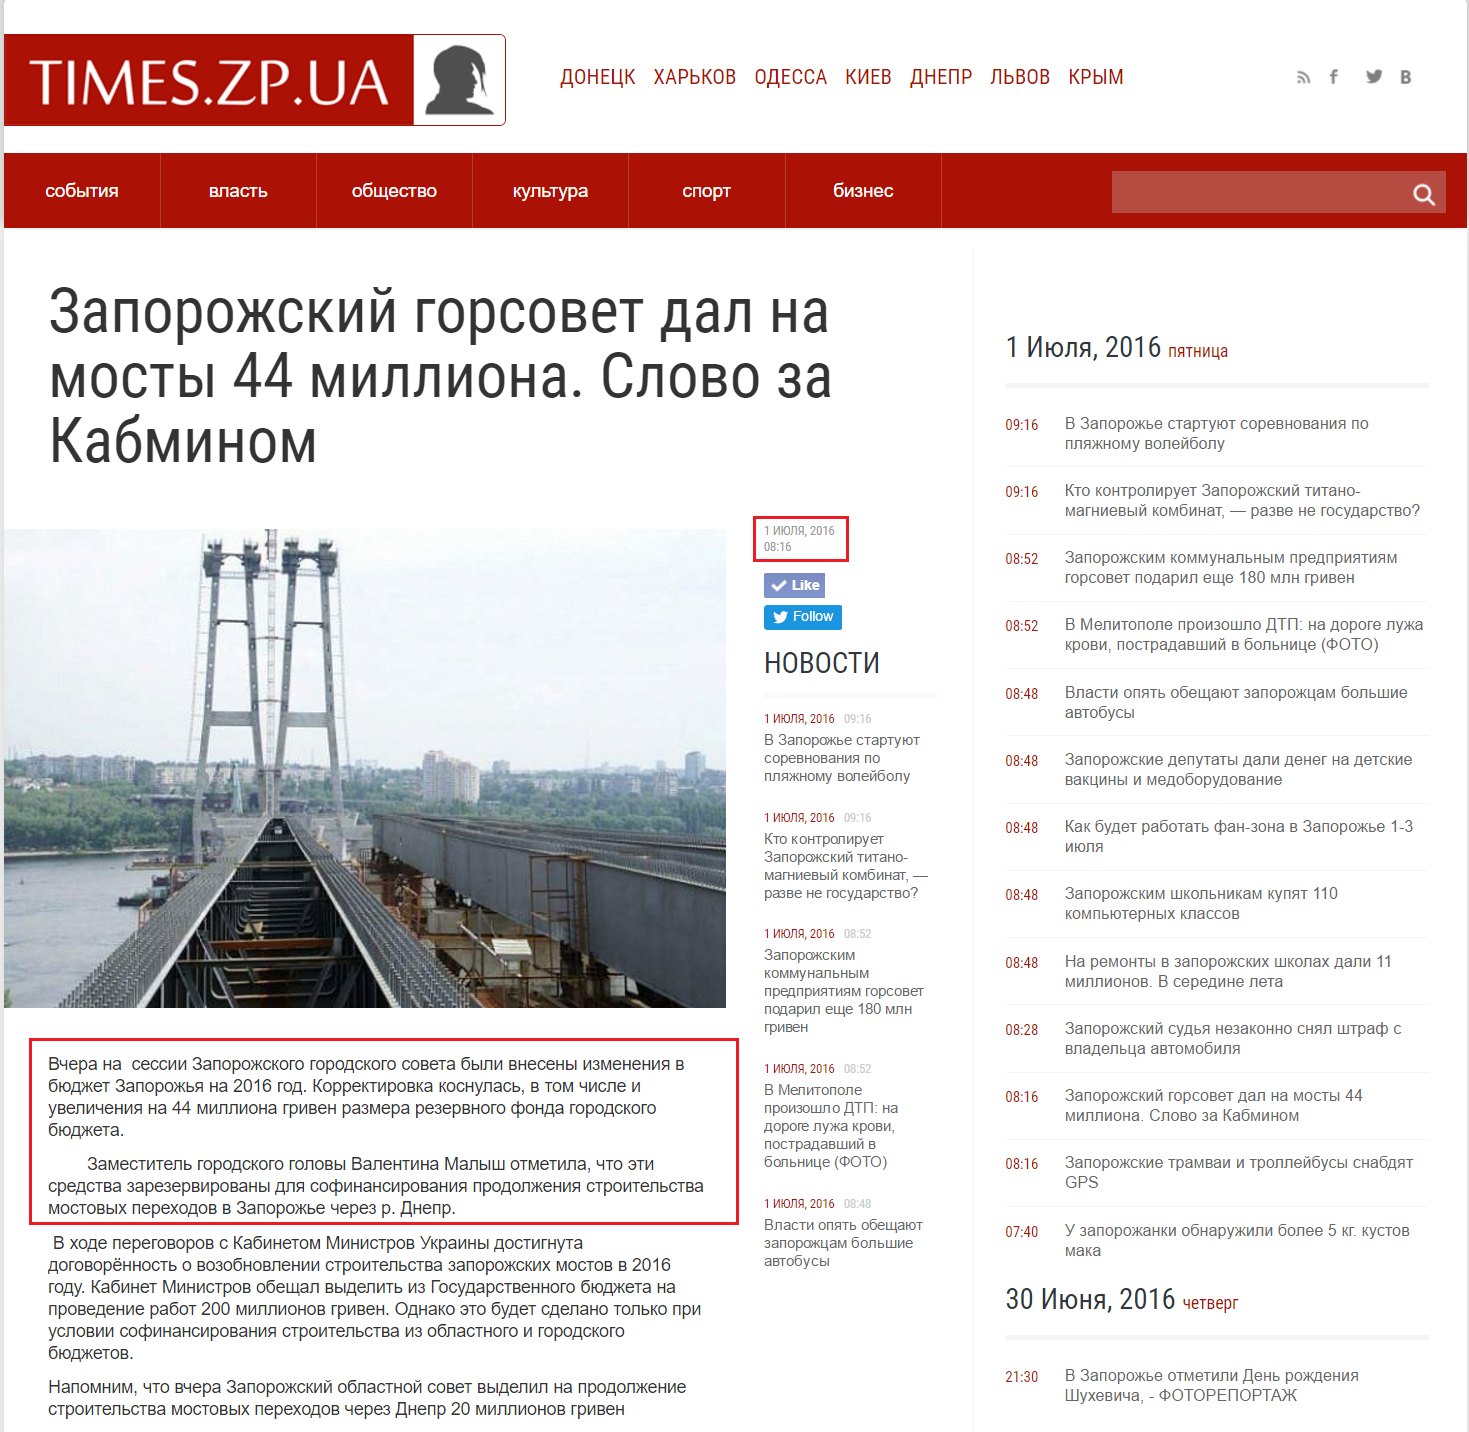 http://times.zp.ua/news/fresh/zaporozhskiy_gorsovet_dal_na_mosty_44_milliona_slovo_za_kabminom/183975/